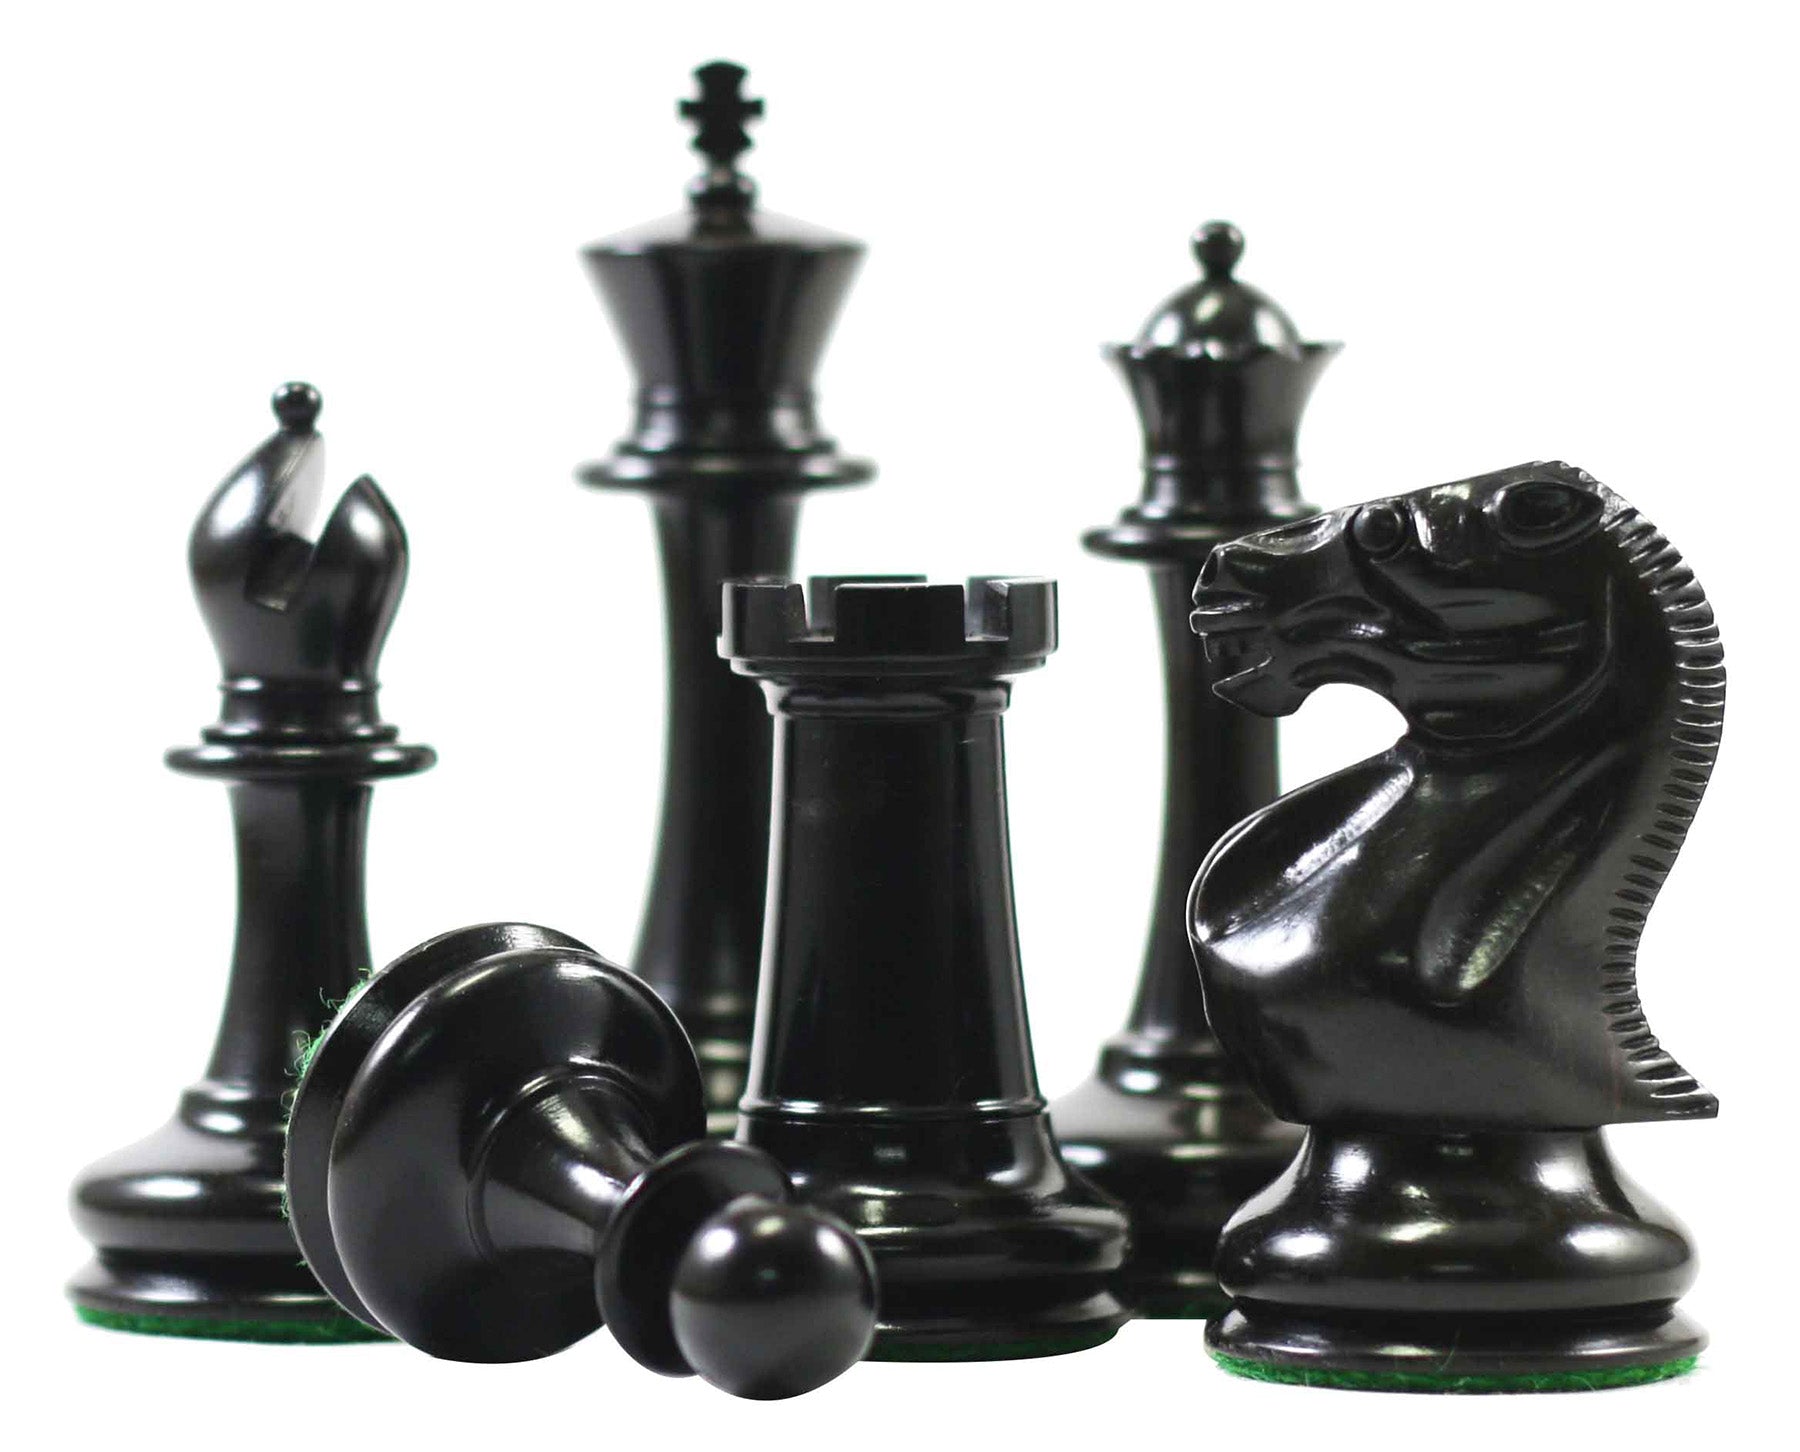 Basic Club Chess Set